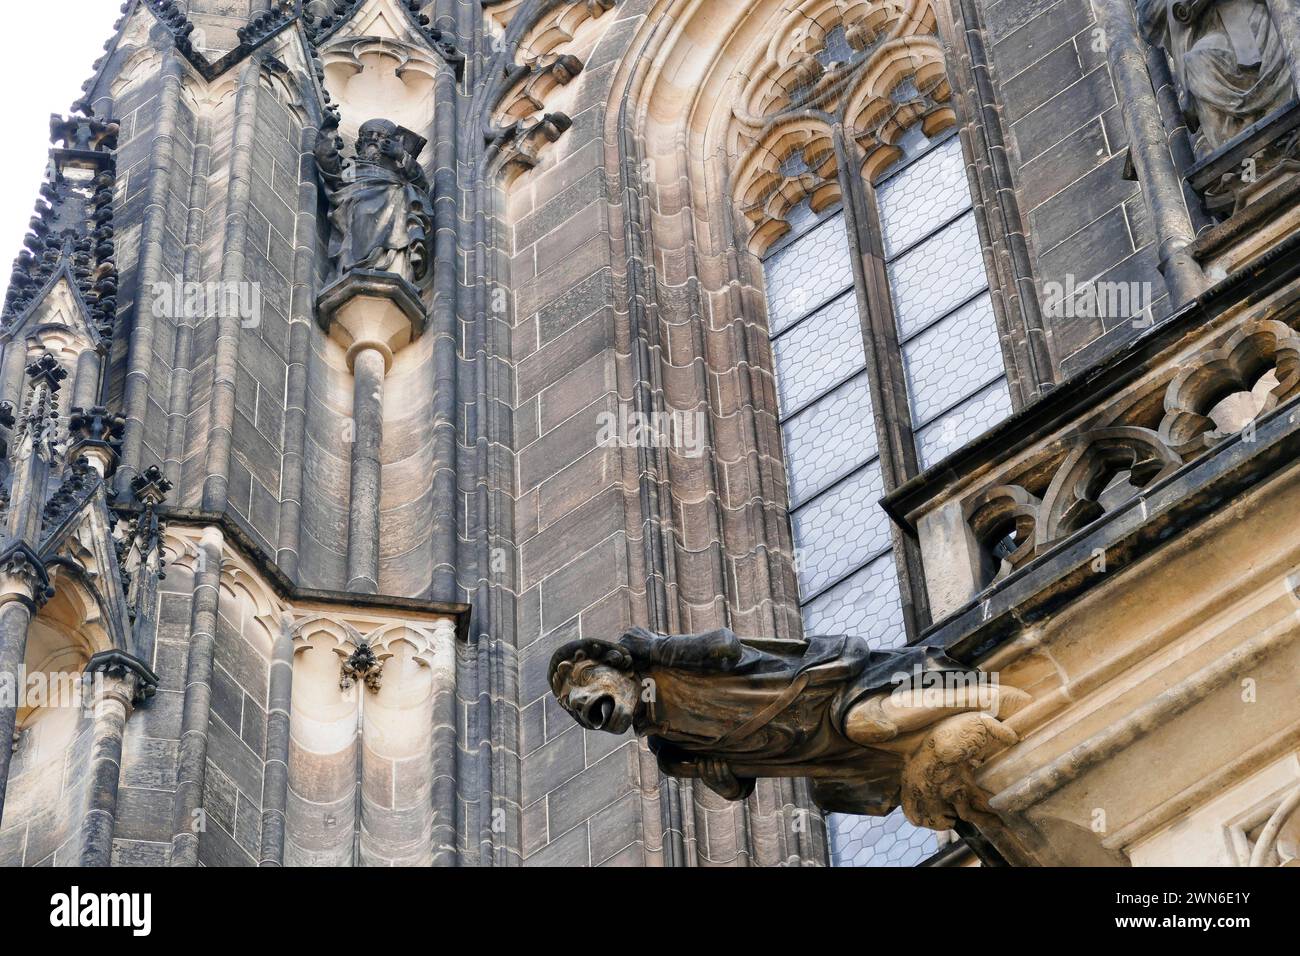 Prague Castle - Gargoyles on Gothic architecture of st. Vitus cathedral. Czech Republic Stock Photo